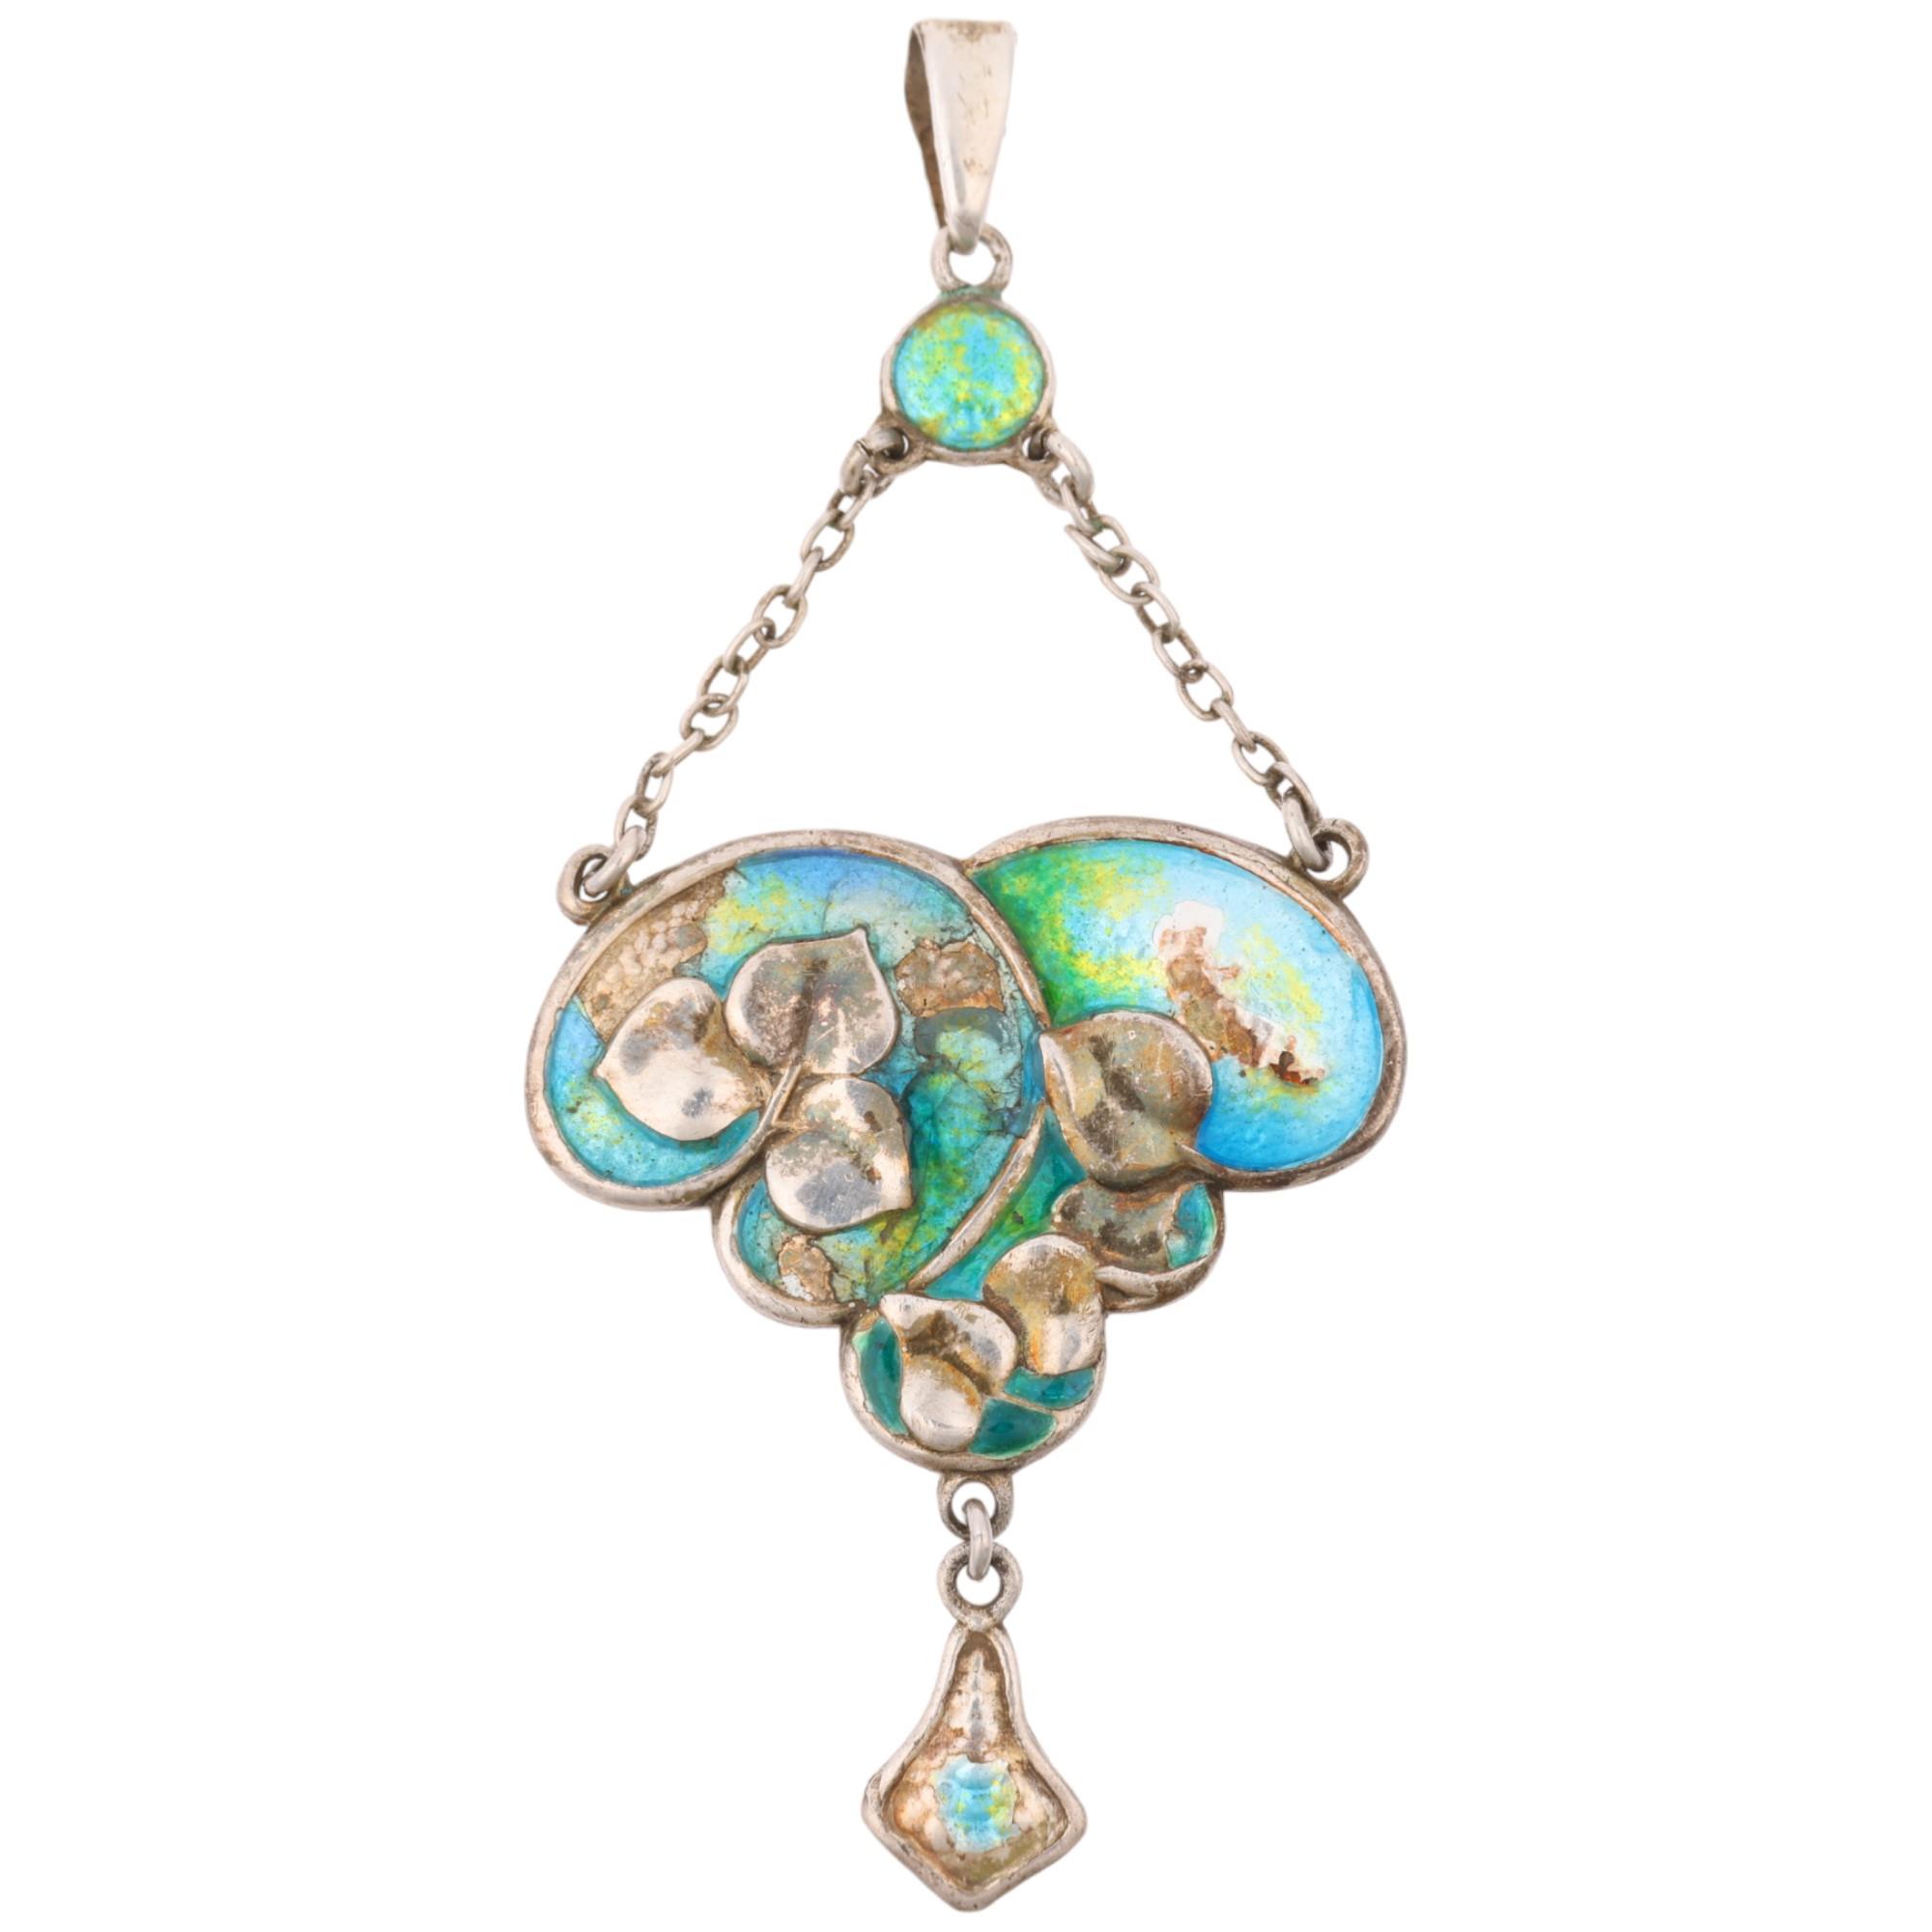 CHARLES HORNER - an Art Nouveau silver and peacock enamel floral lavalier pendant, maker CH,